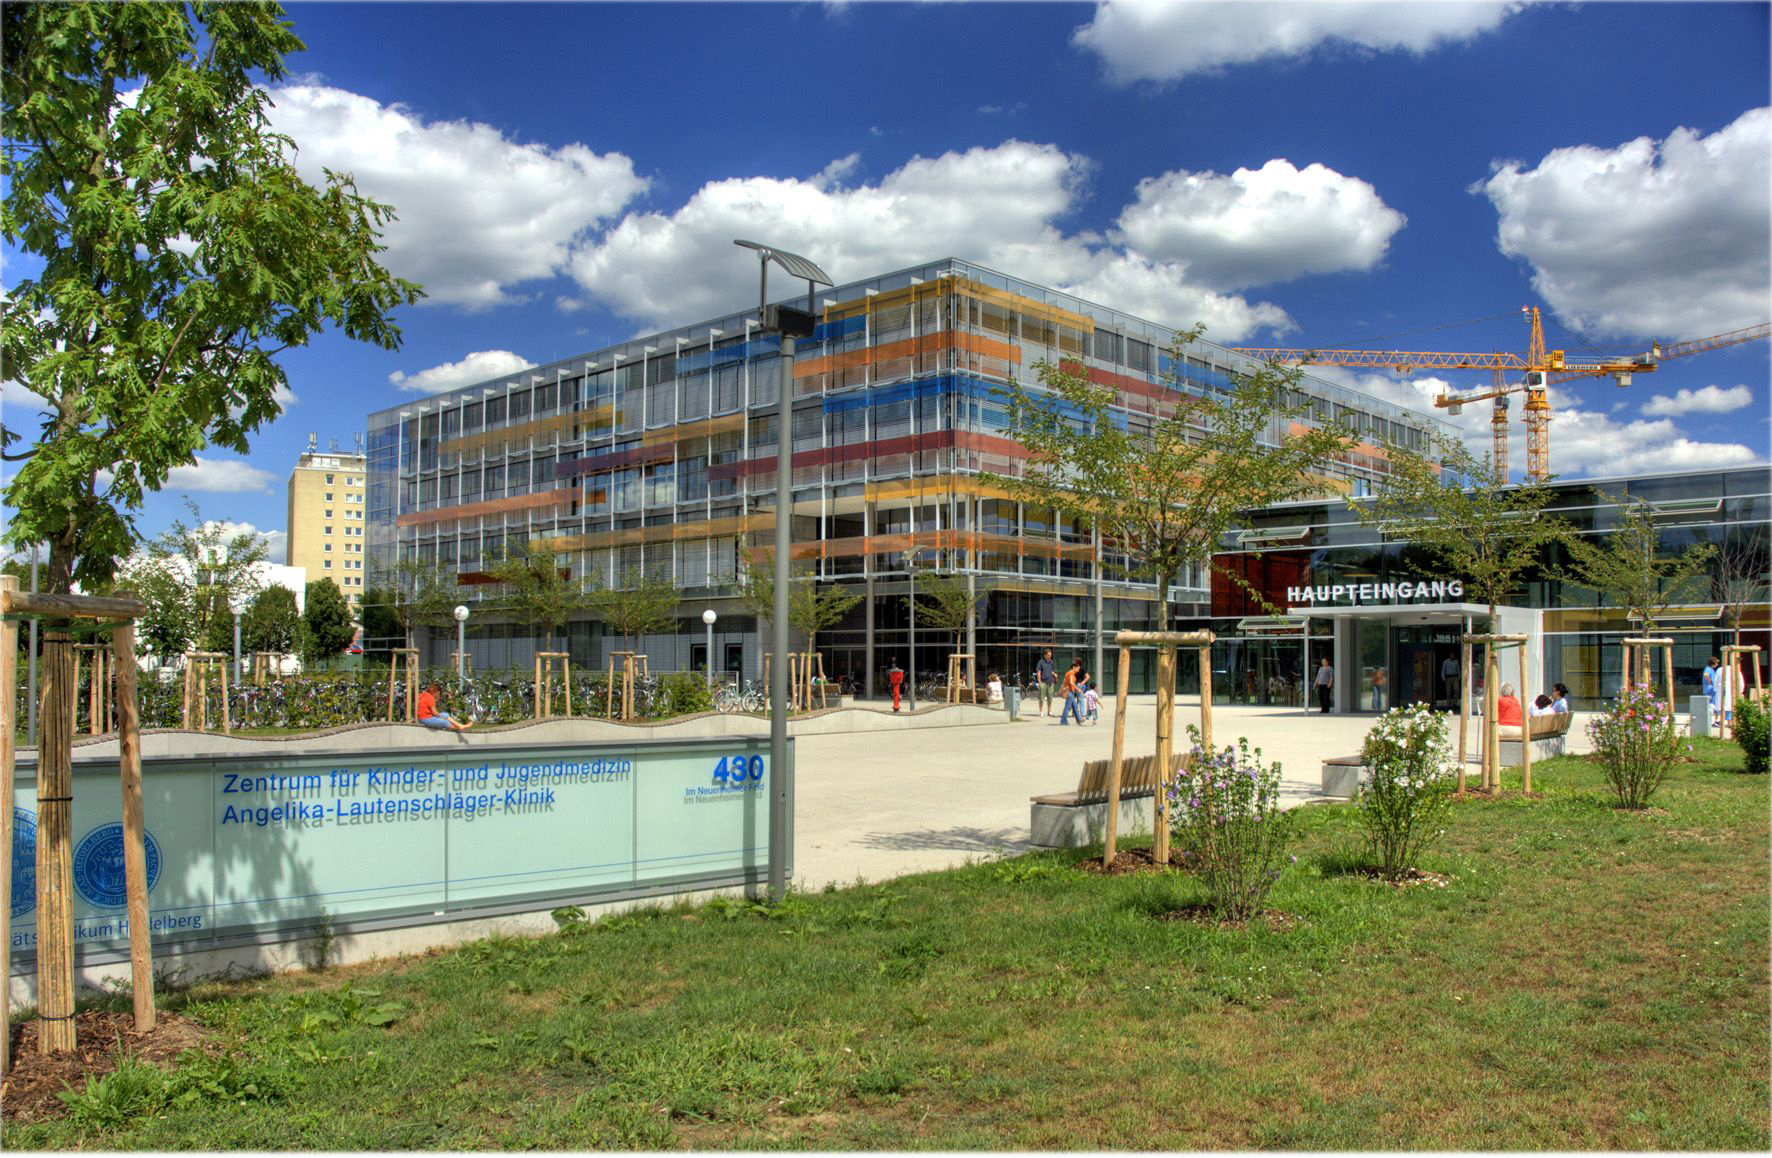 Heidelberg University Hospital (photo: Heidelberg University Hospital)